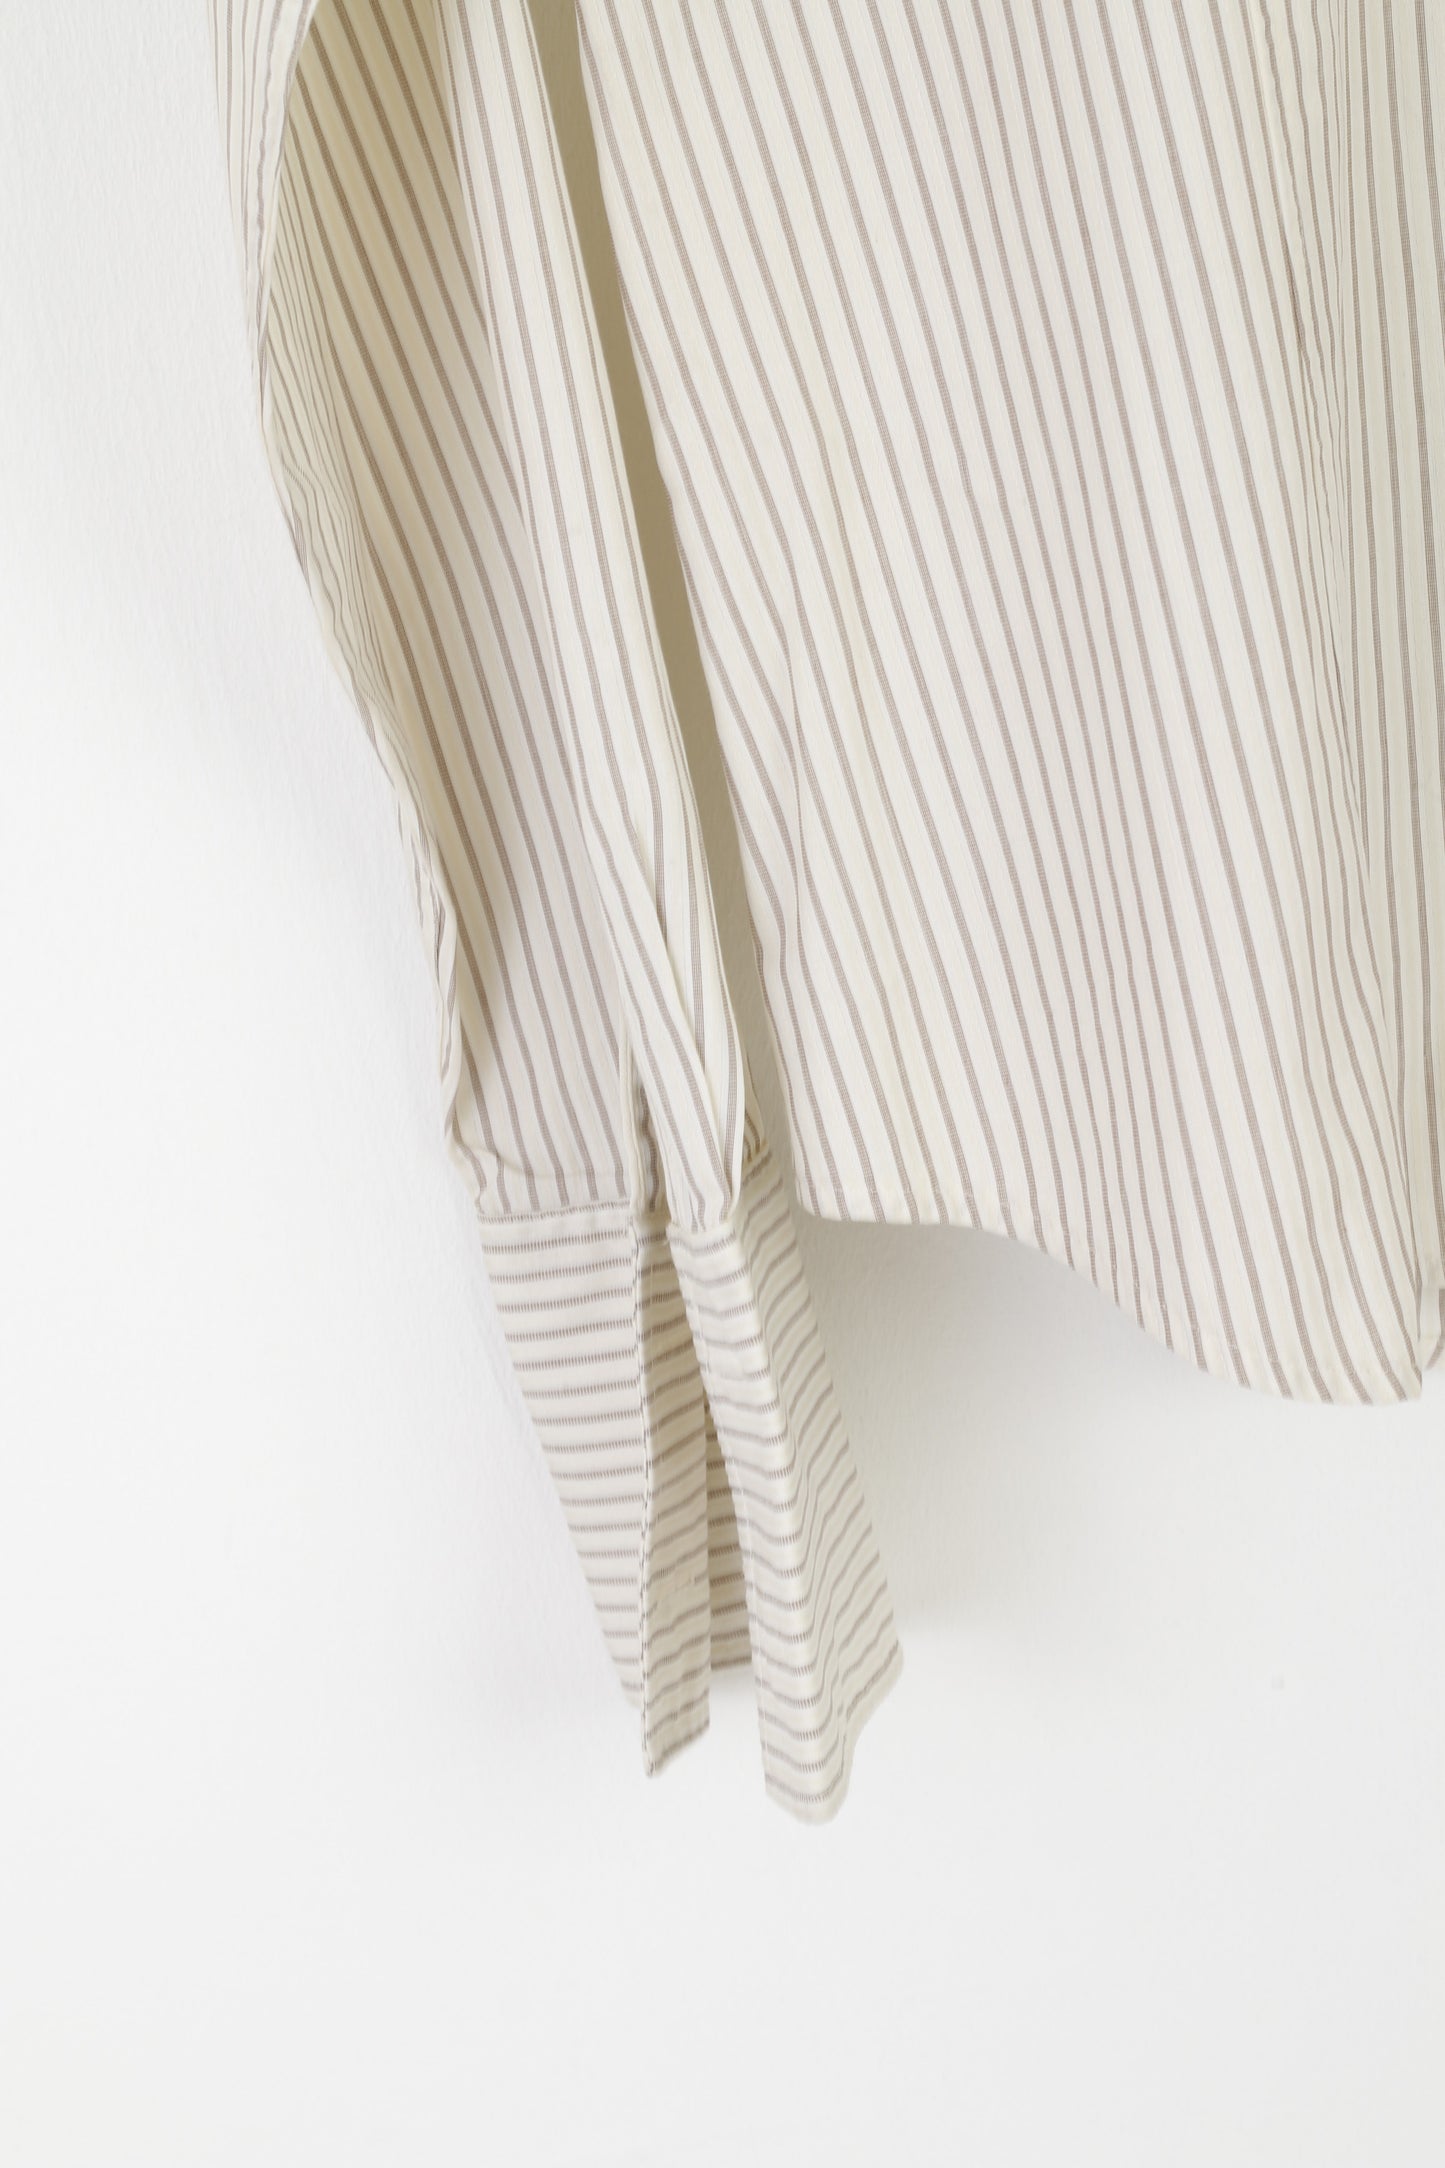 T.M. Lewin Women 14 M Casual Shirt Beige Cotton Shiny Striped Long Sleeve Top